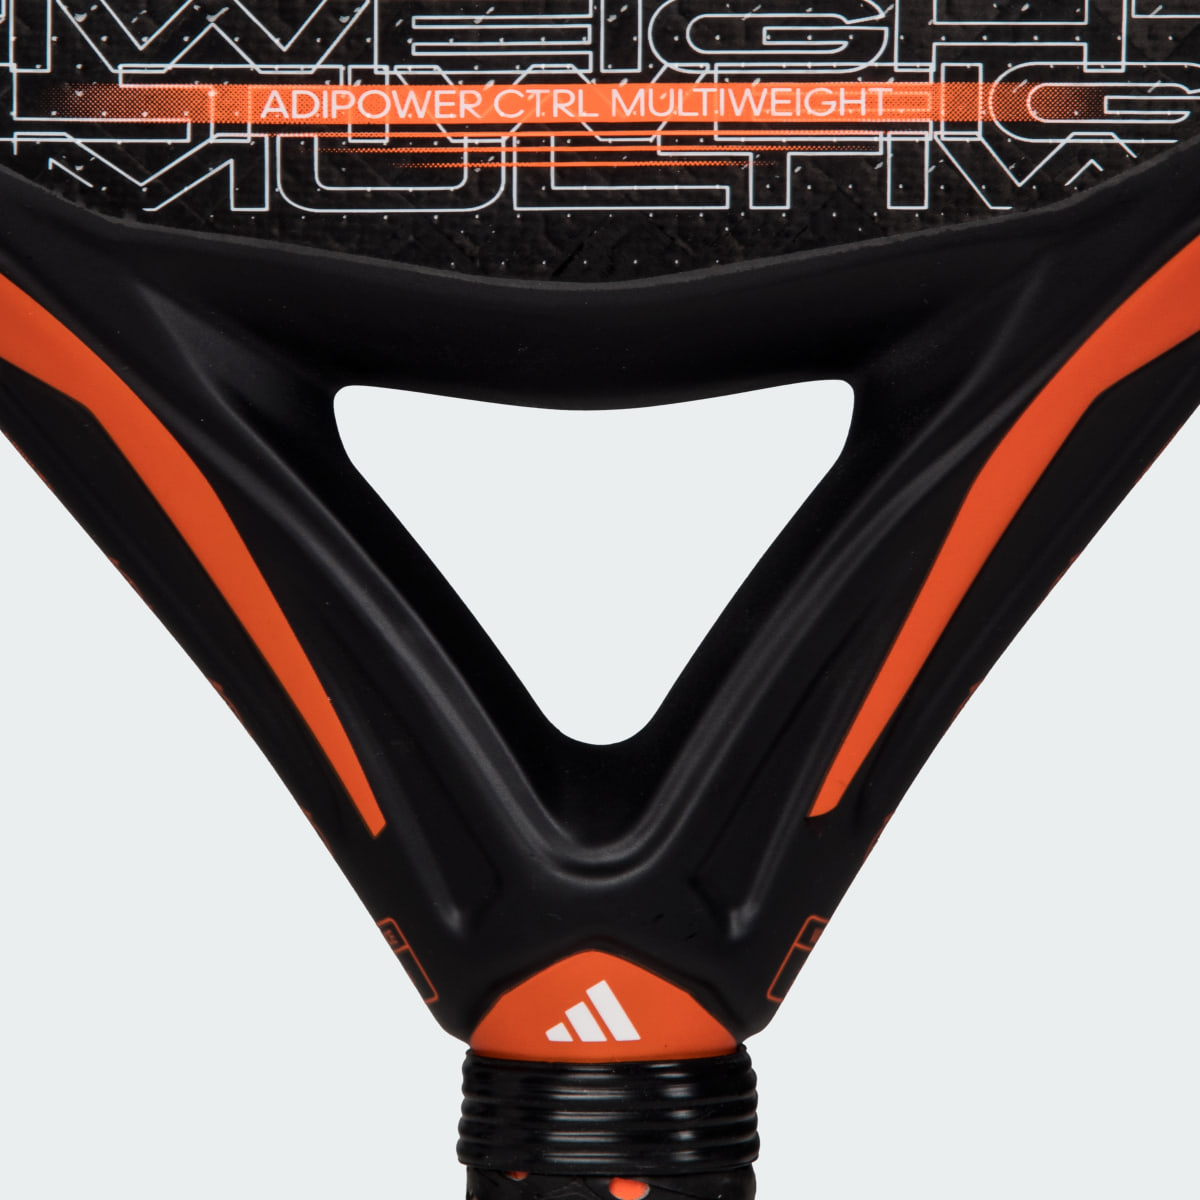 Adidas Raquette de padel Adipower Multiweight CTRL 3.3. 6